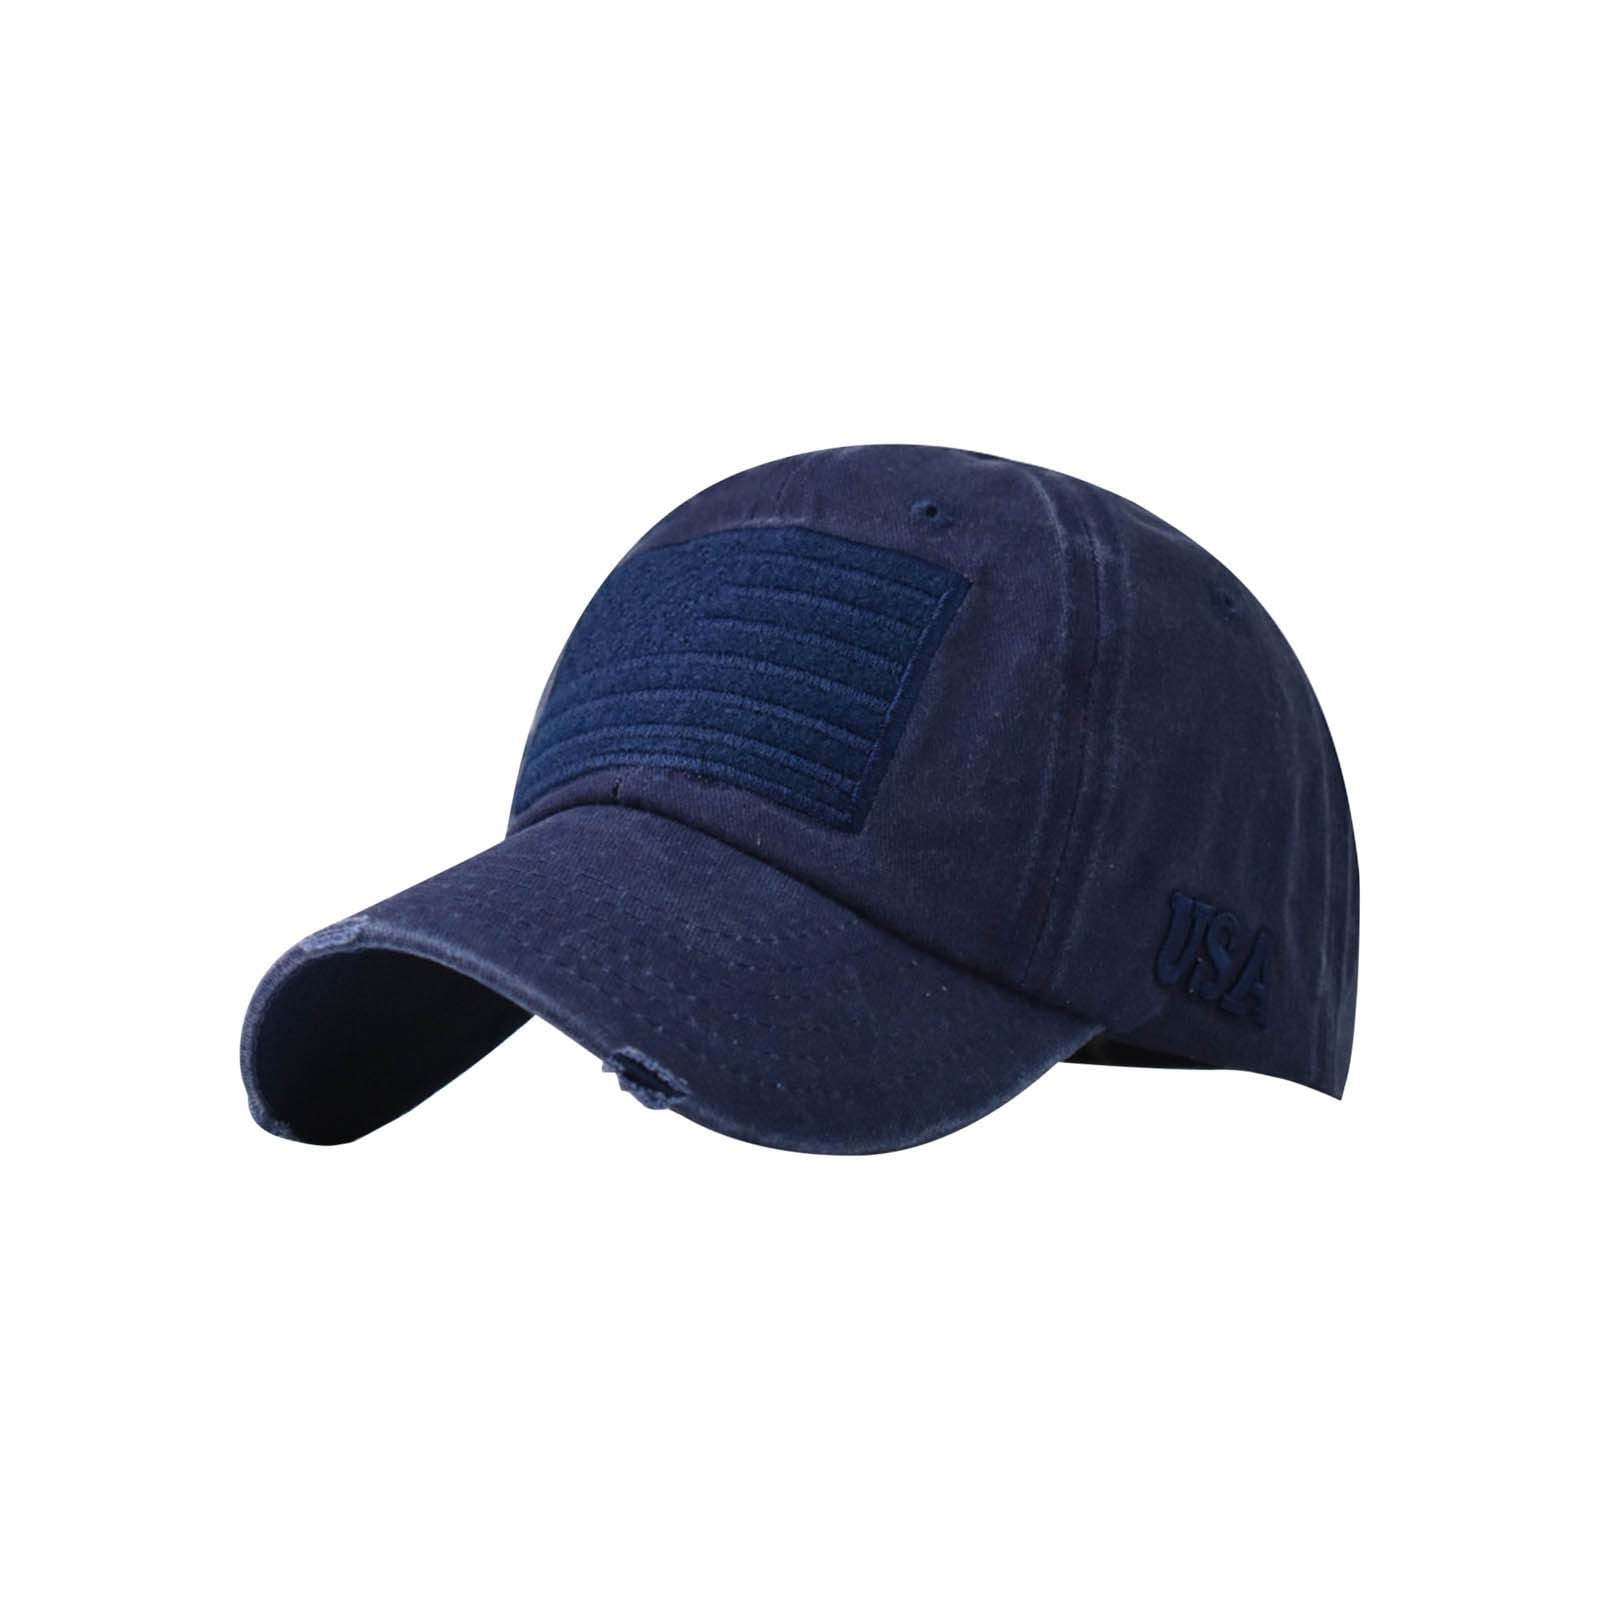 Cowboy Hats For Men and Women Outdoor Wash Baseball Caps Sun Shade Caps  Navy 